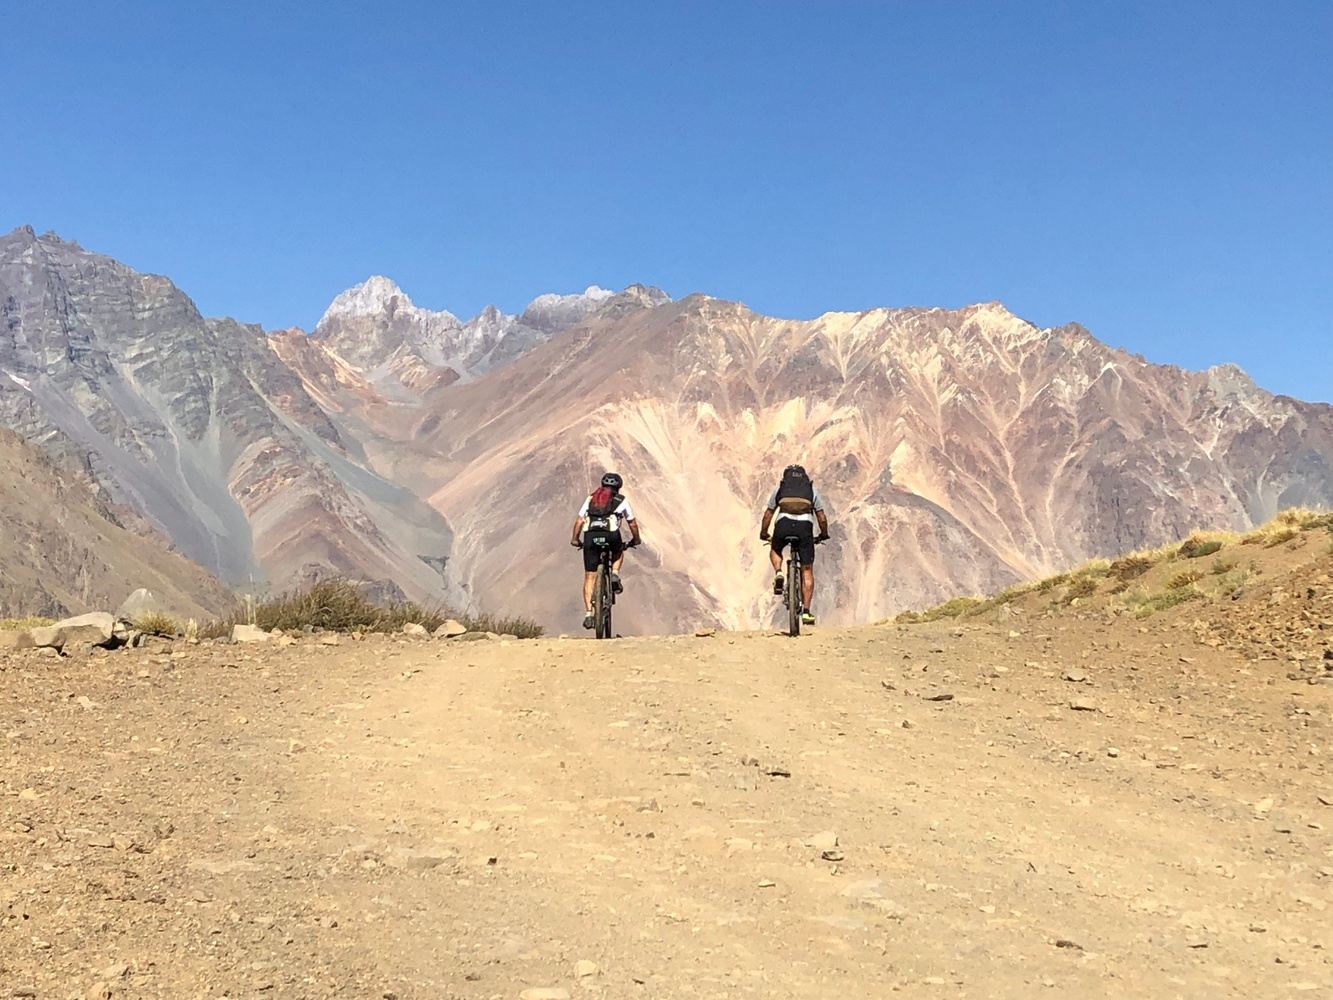 The Andes cross-Sampabikers